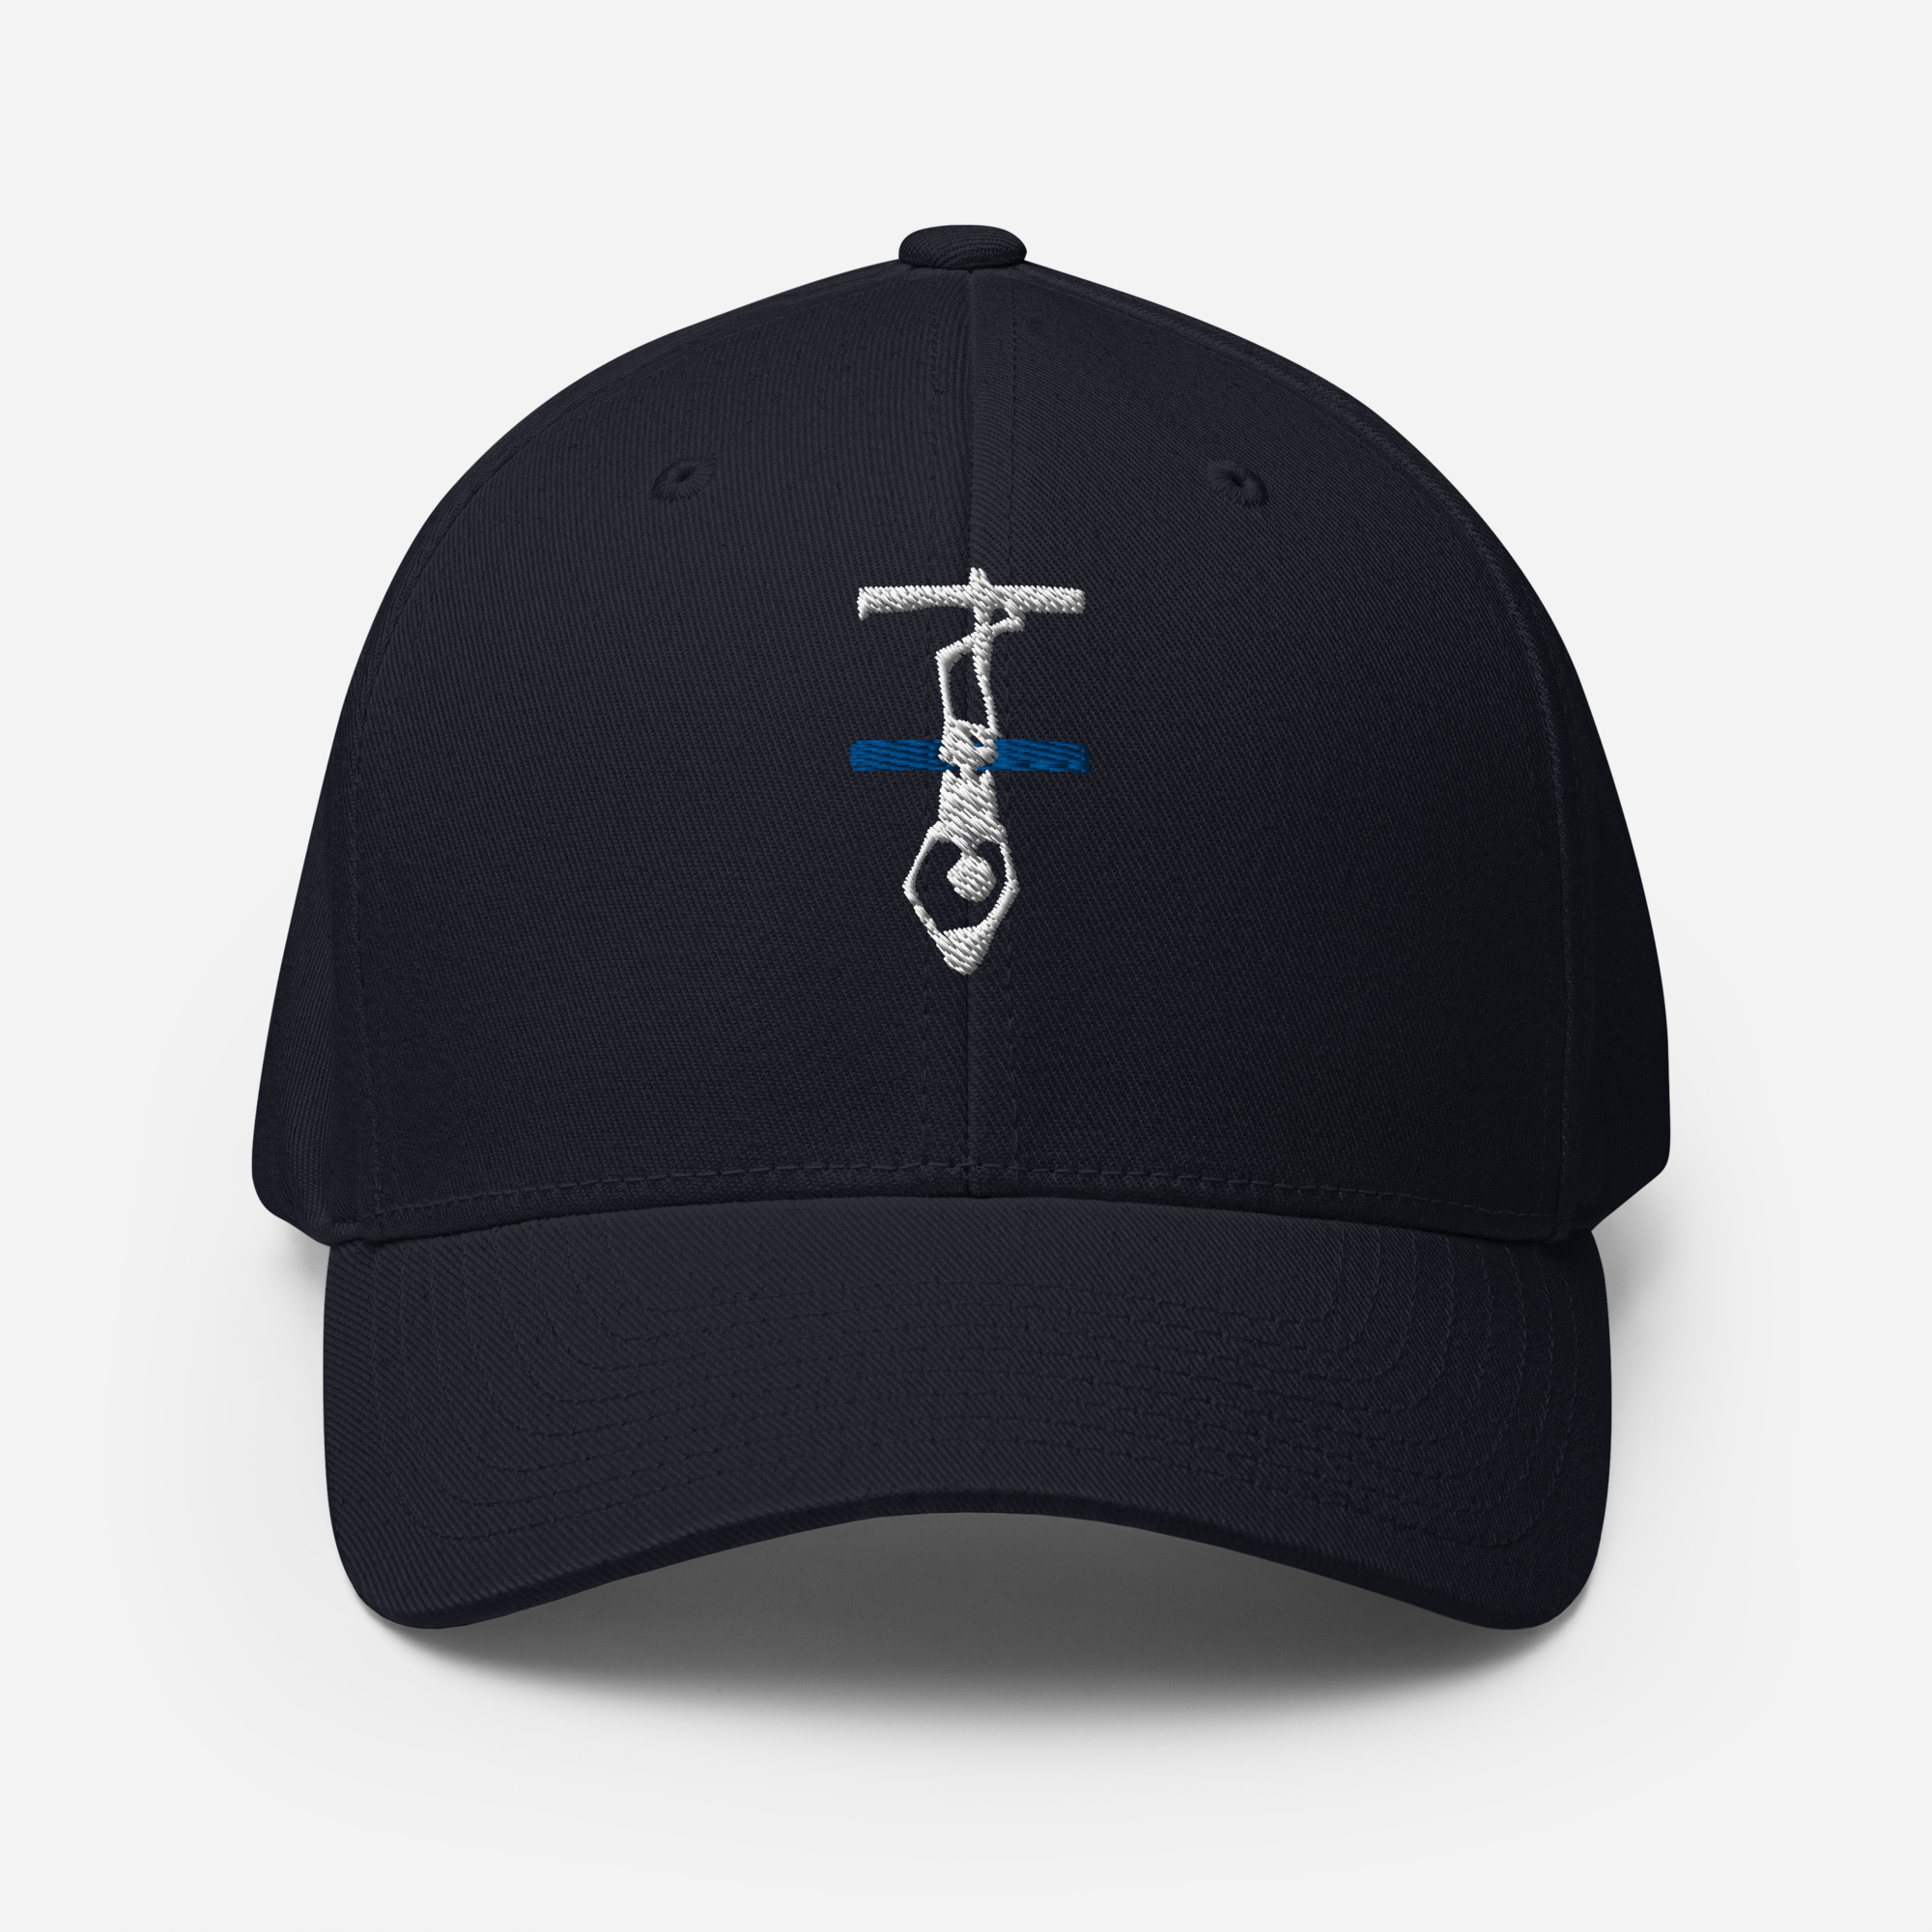 Thin Blue Line Hanged Man Structured Twill Cap - White Logo